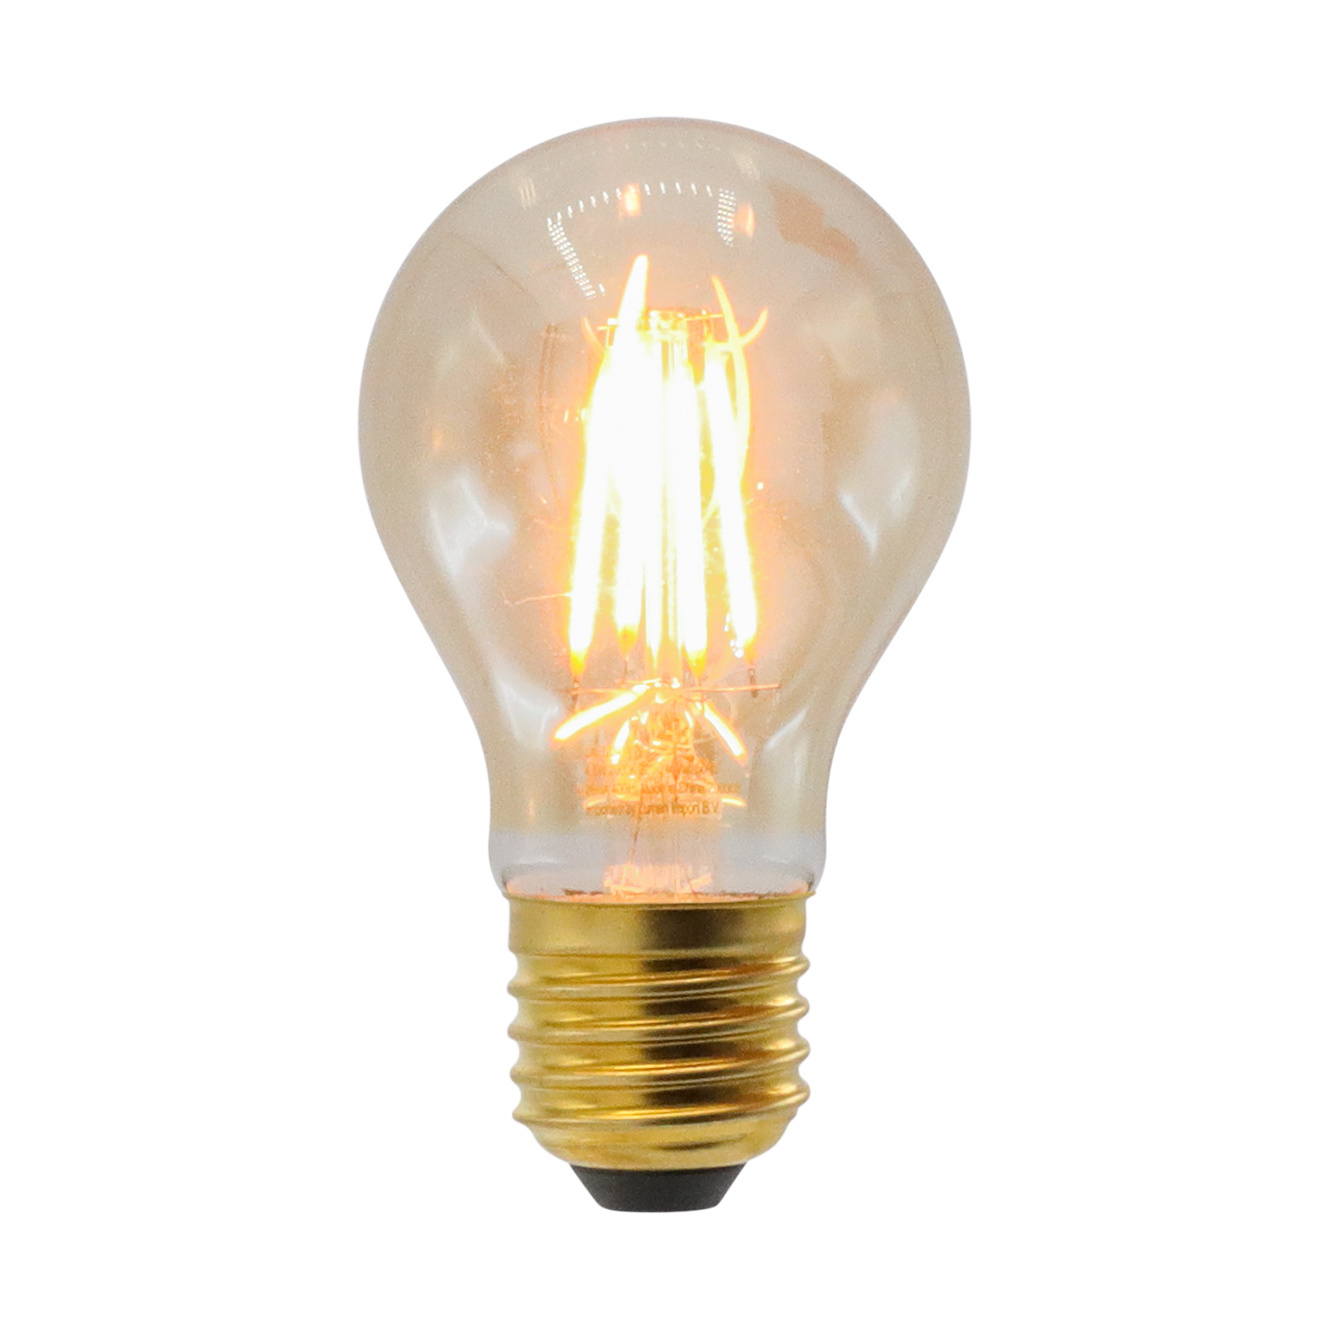 Ampoule filament 2,5W, 4,5W, 7W & 10W, verre ambré Ø60 - dimmable - LumenXL